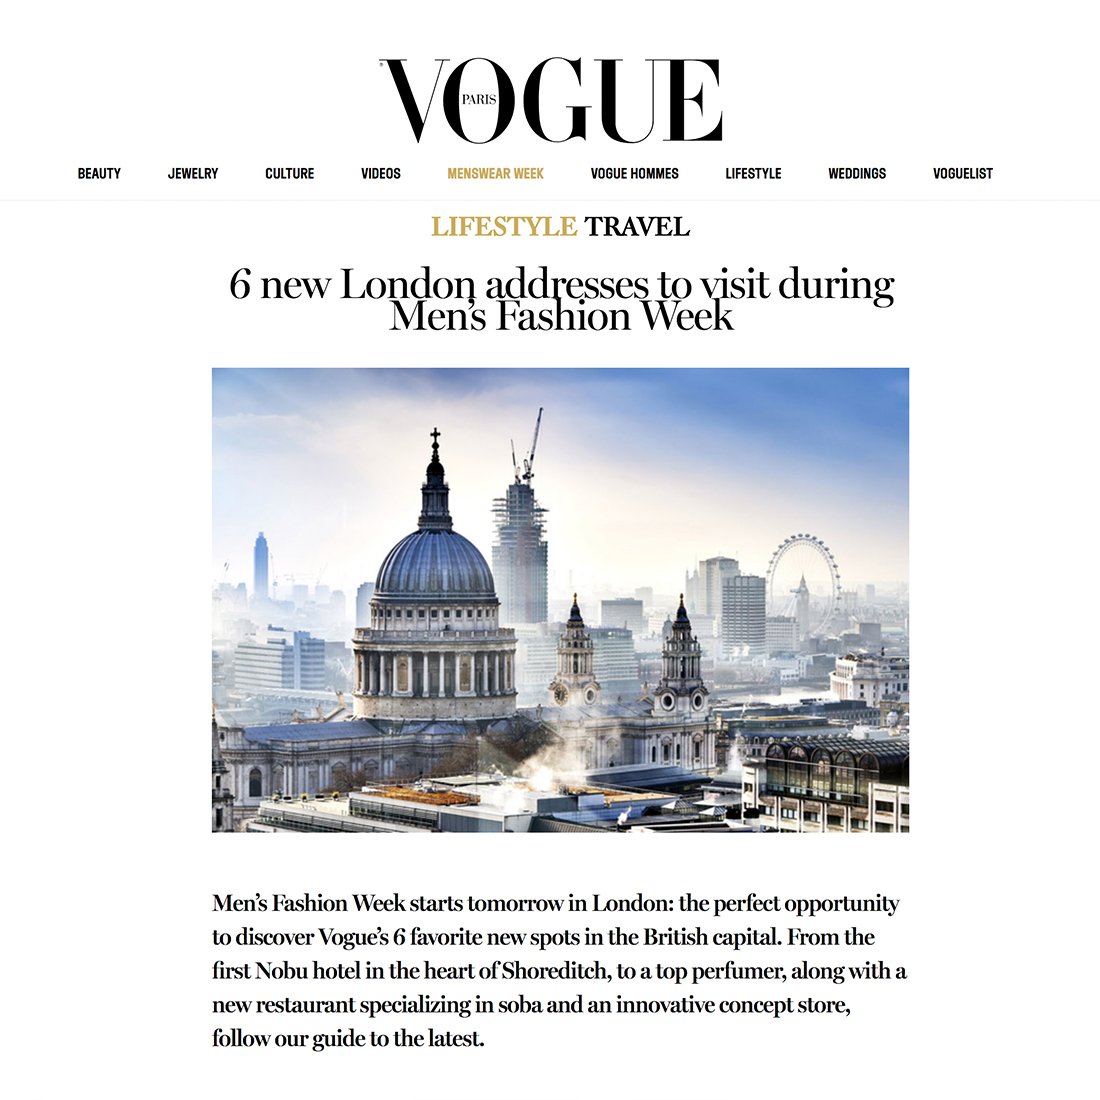 Paris Vogue